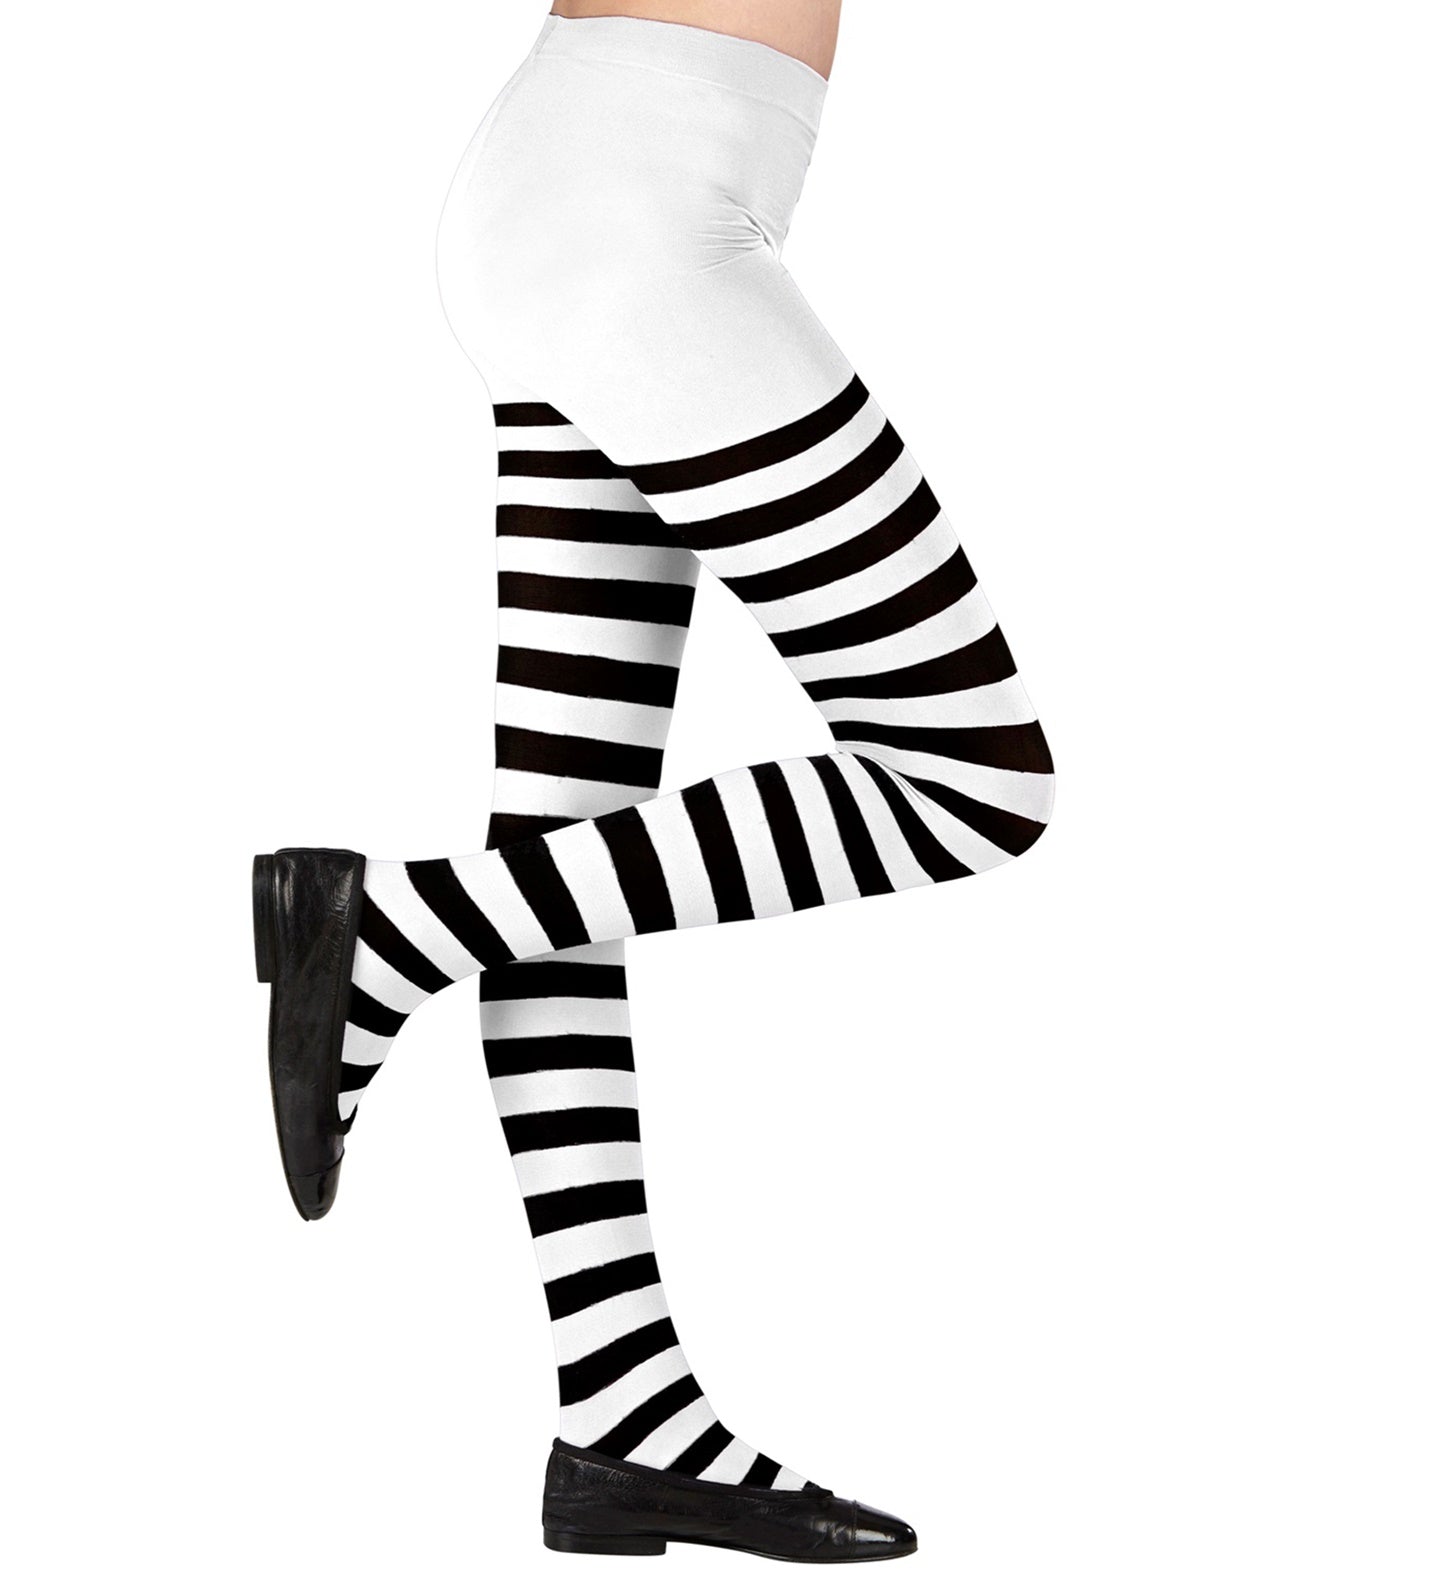 Children's White and Black Striped stockings